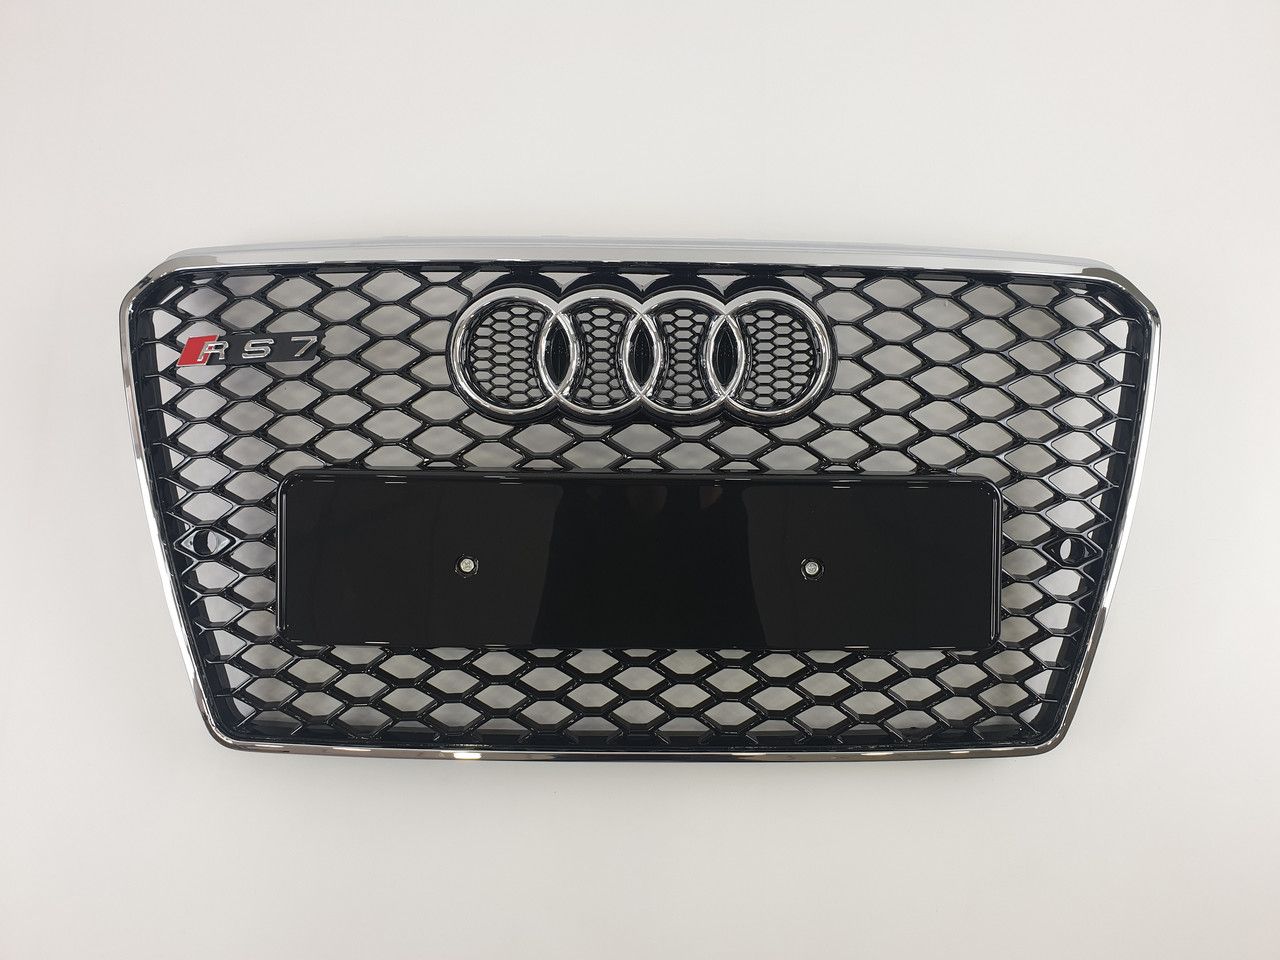 Решетка радиатора Audi A7 2010-2014 Черна с хром рамкой (в стиле RS)